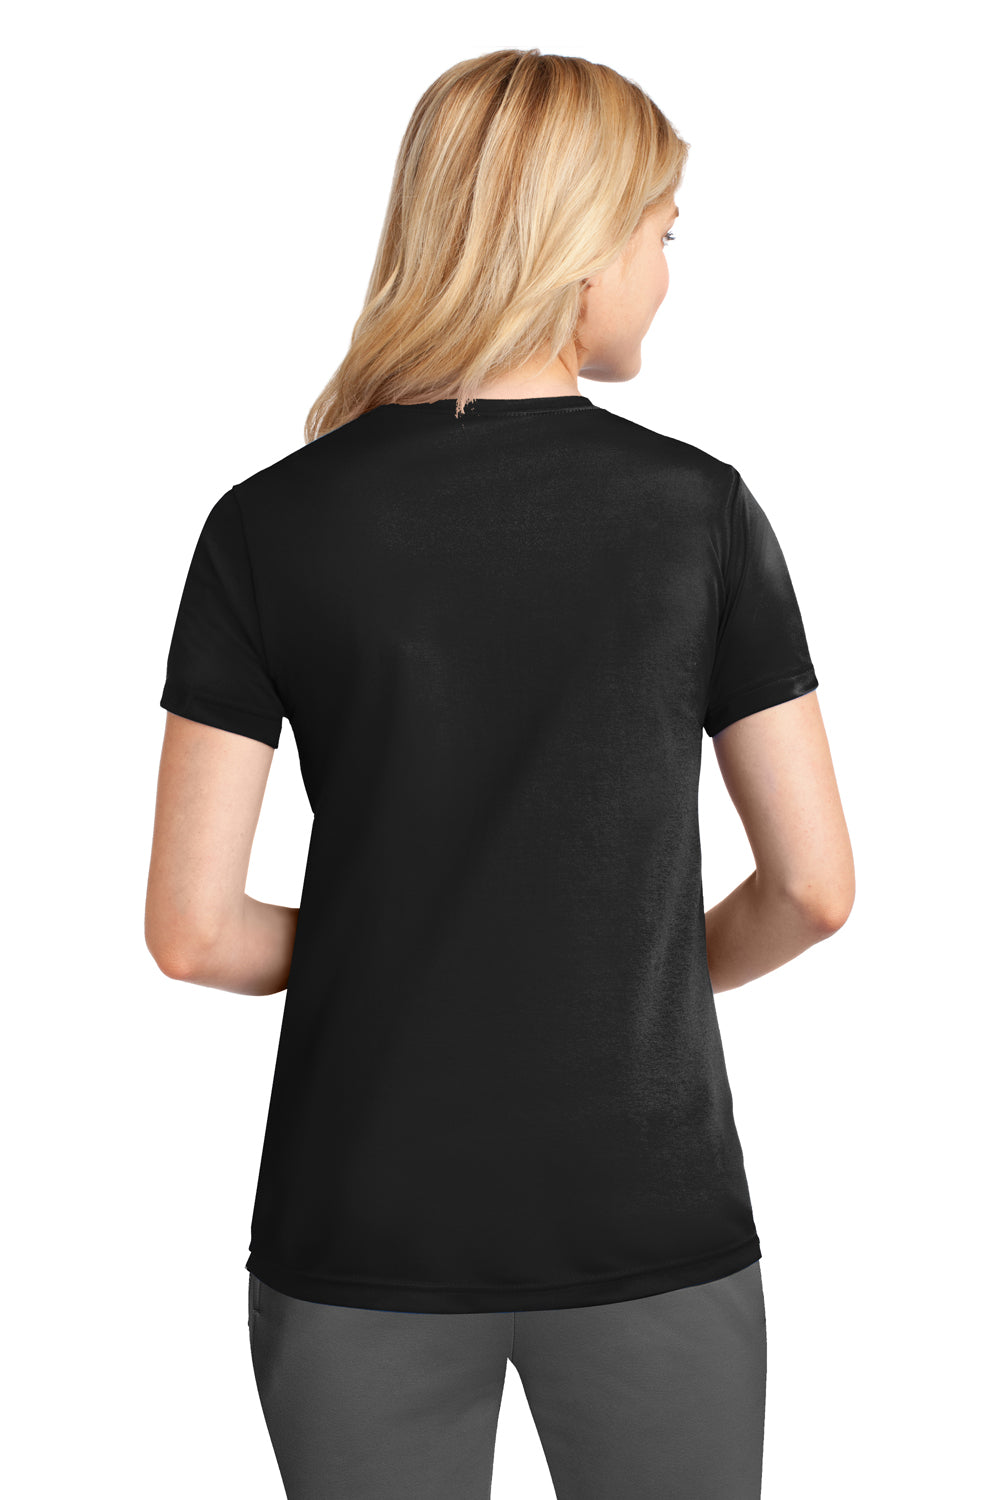 Port & Company LPC380 Womens Dry Zone Performance Moisture Wicking Short Sleeve Crewneck T-Shirt Black Back